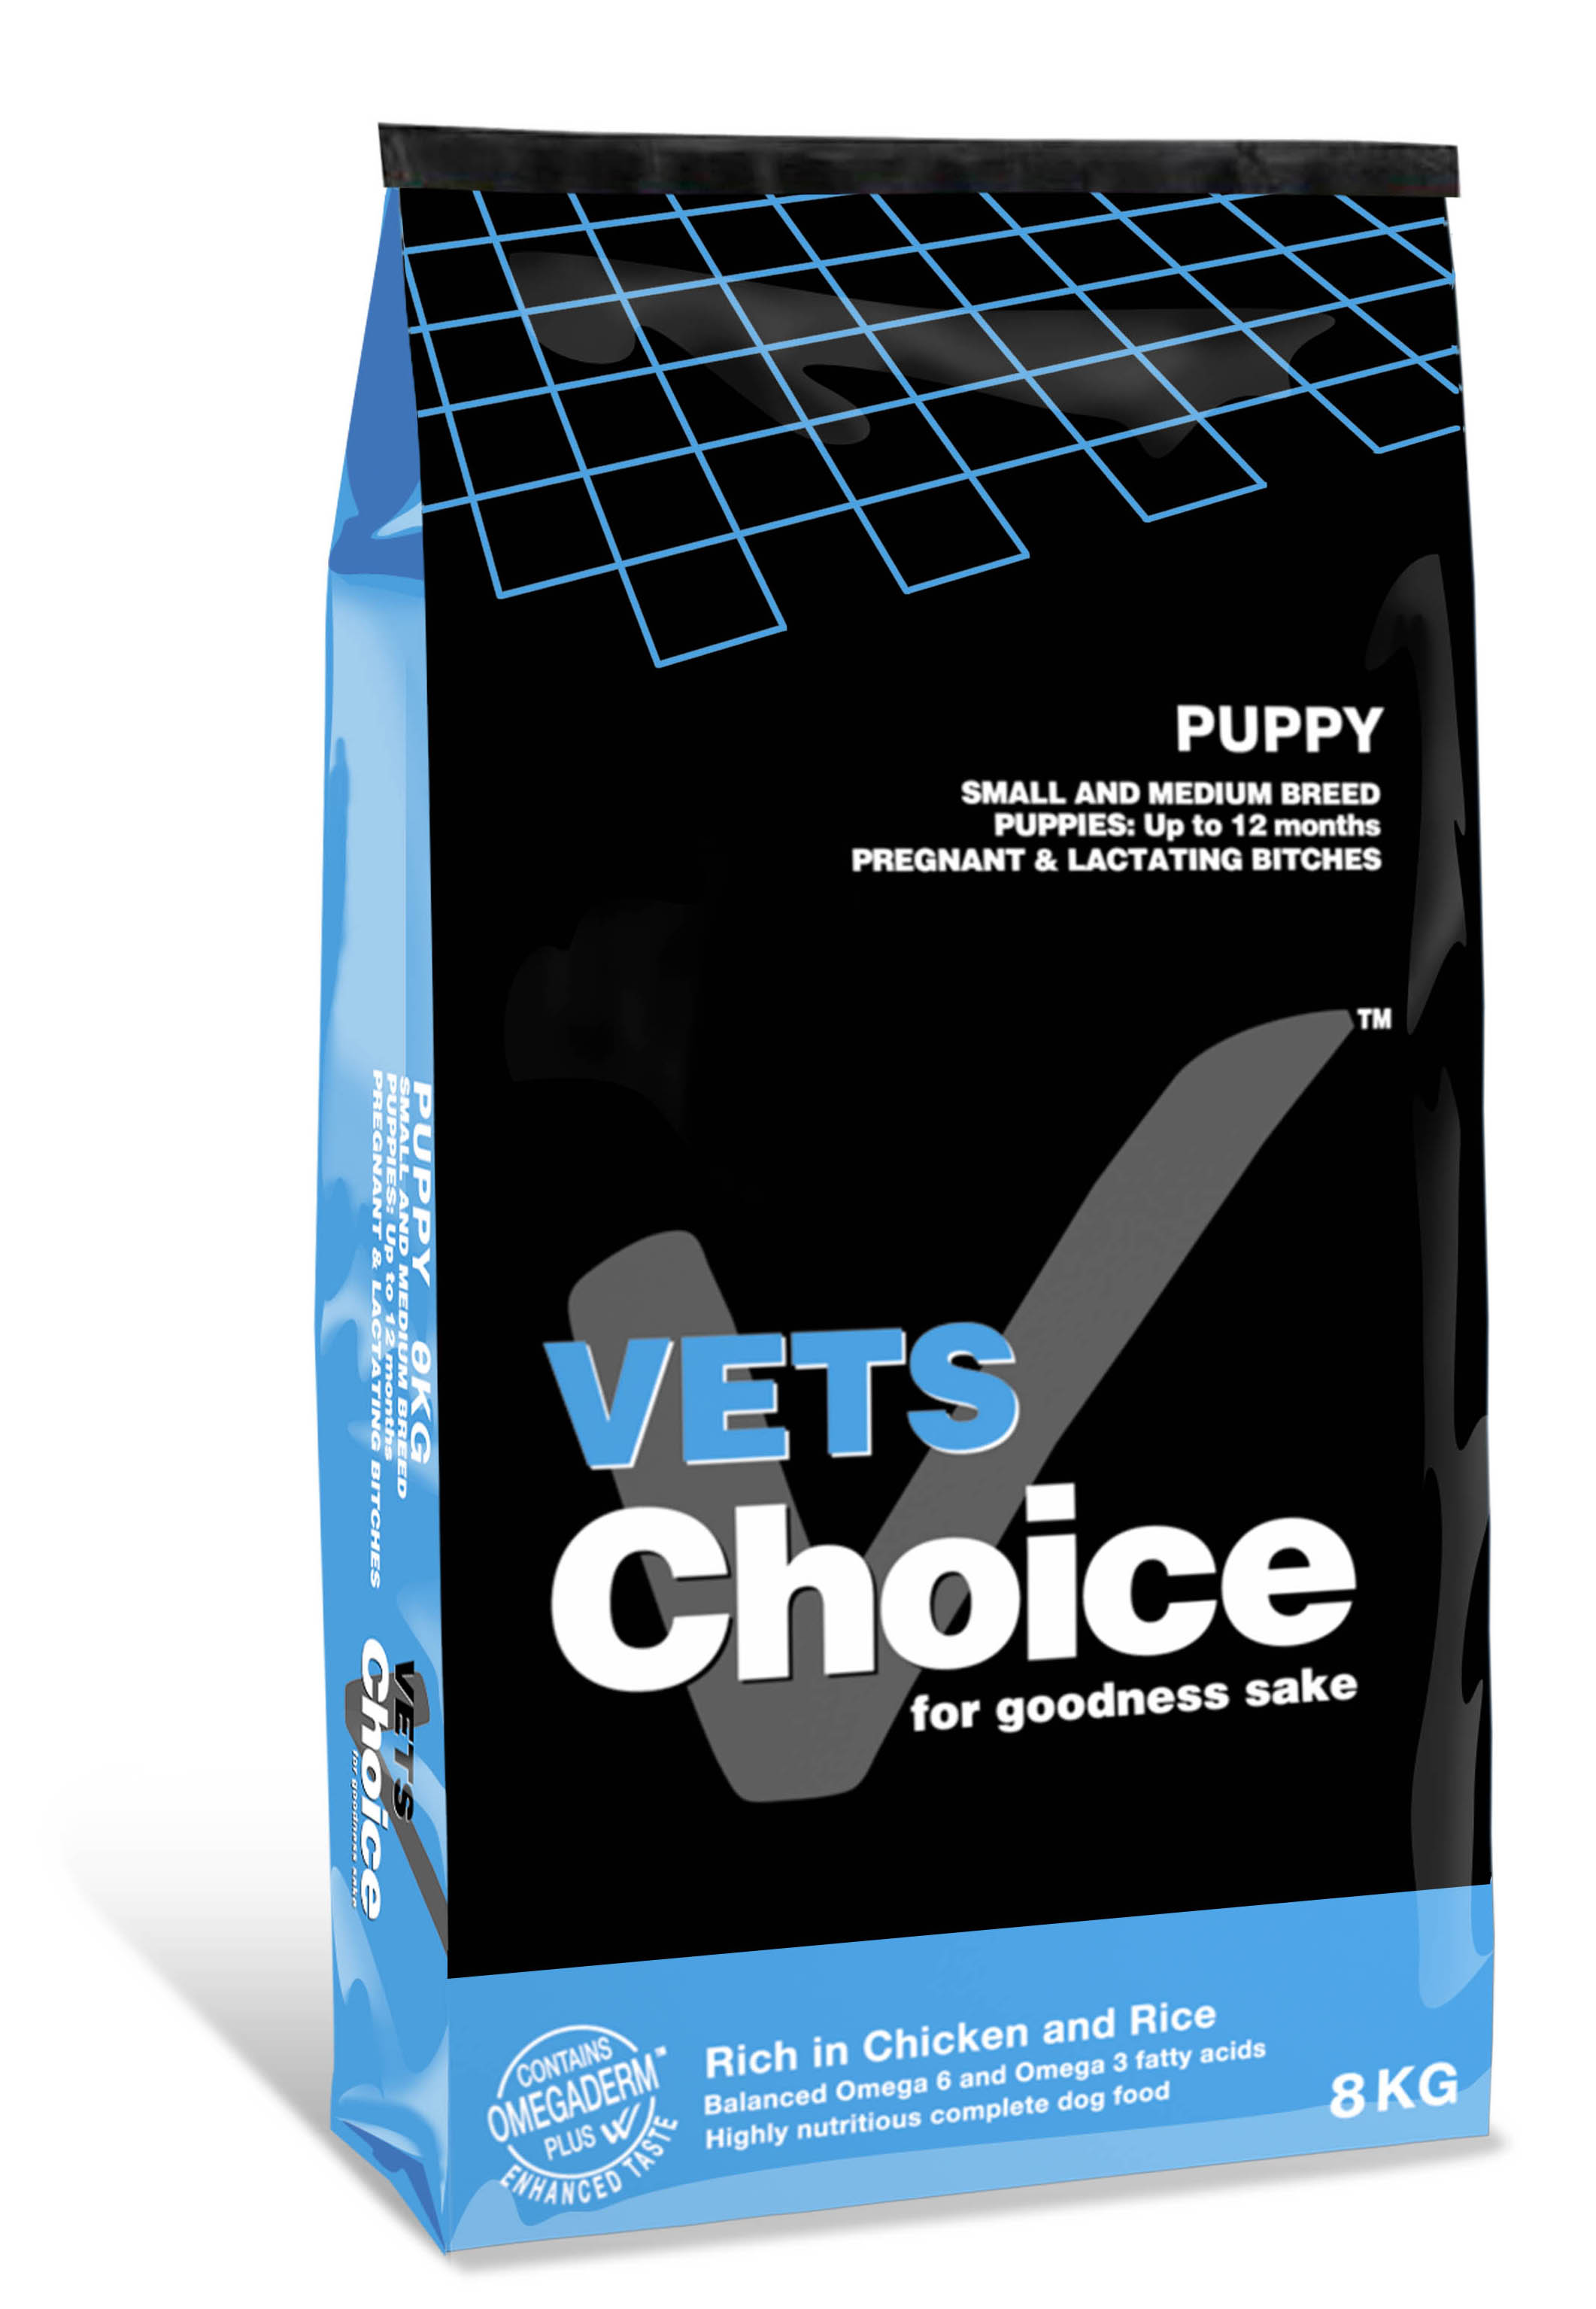 vets-choice-puppy-8kg